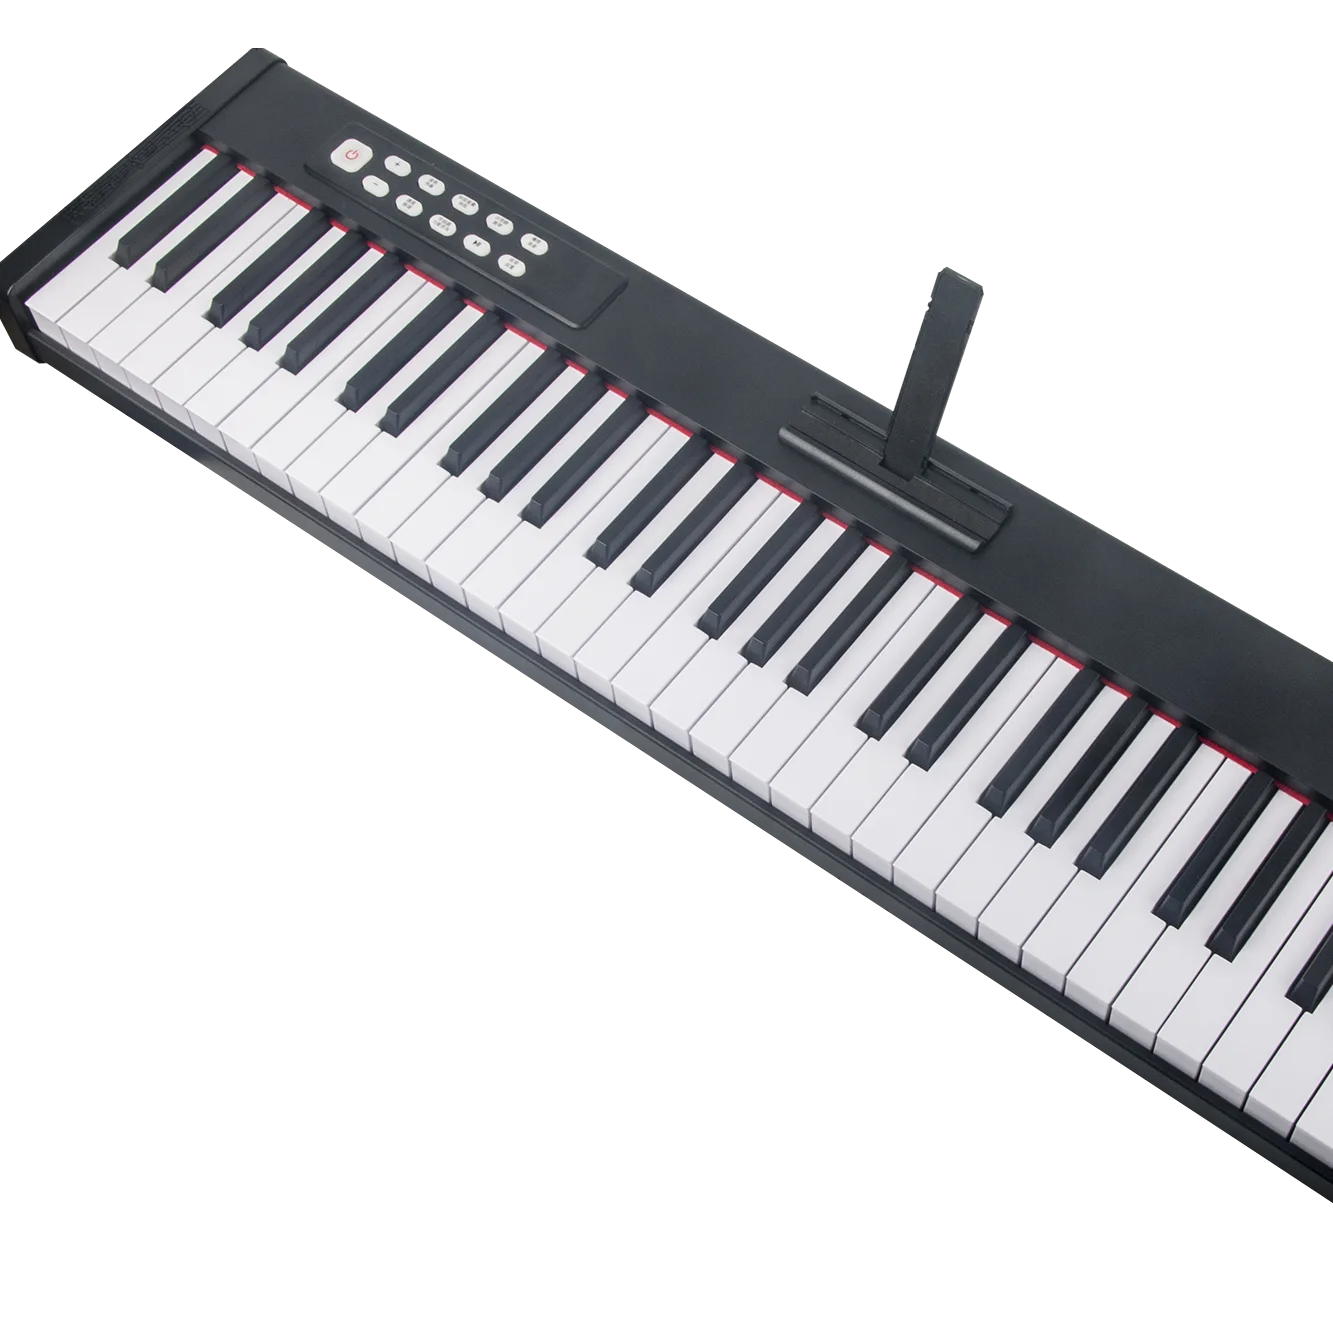 

Practical Hot Sale 61 Keys Digital Piano Electronic Piano USB Mini Keyboard, Black